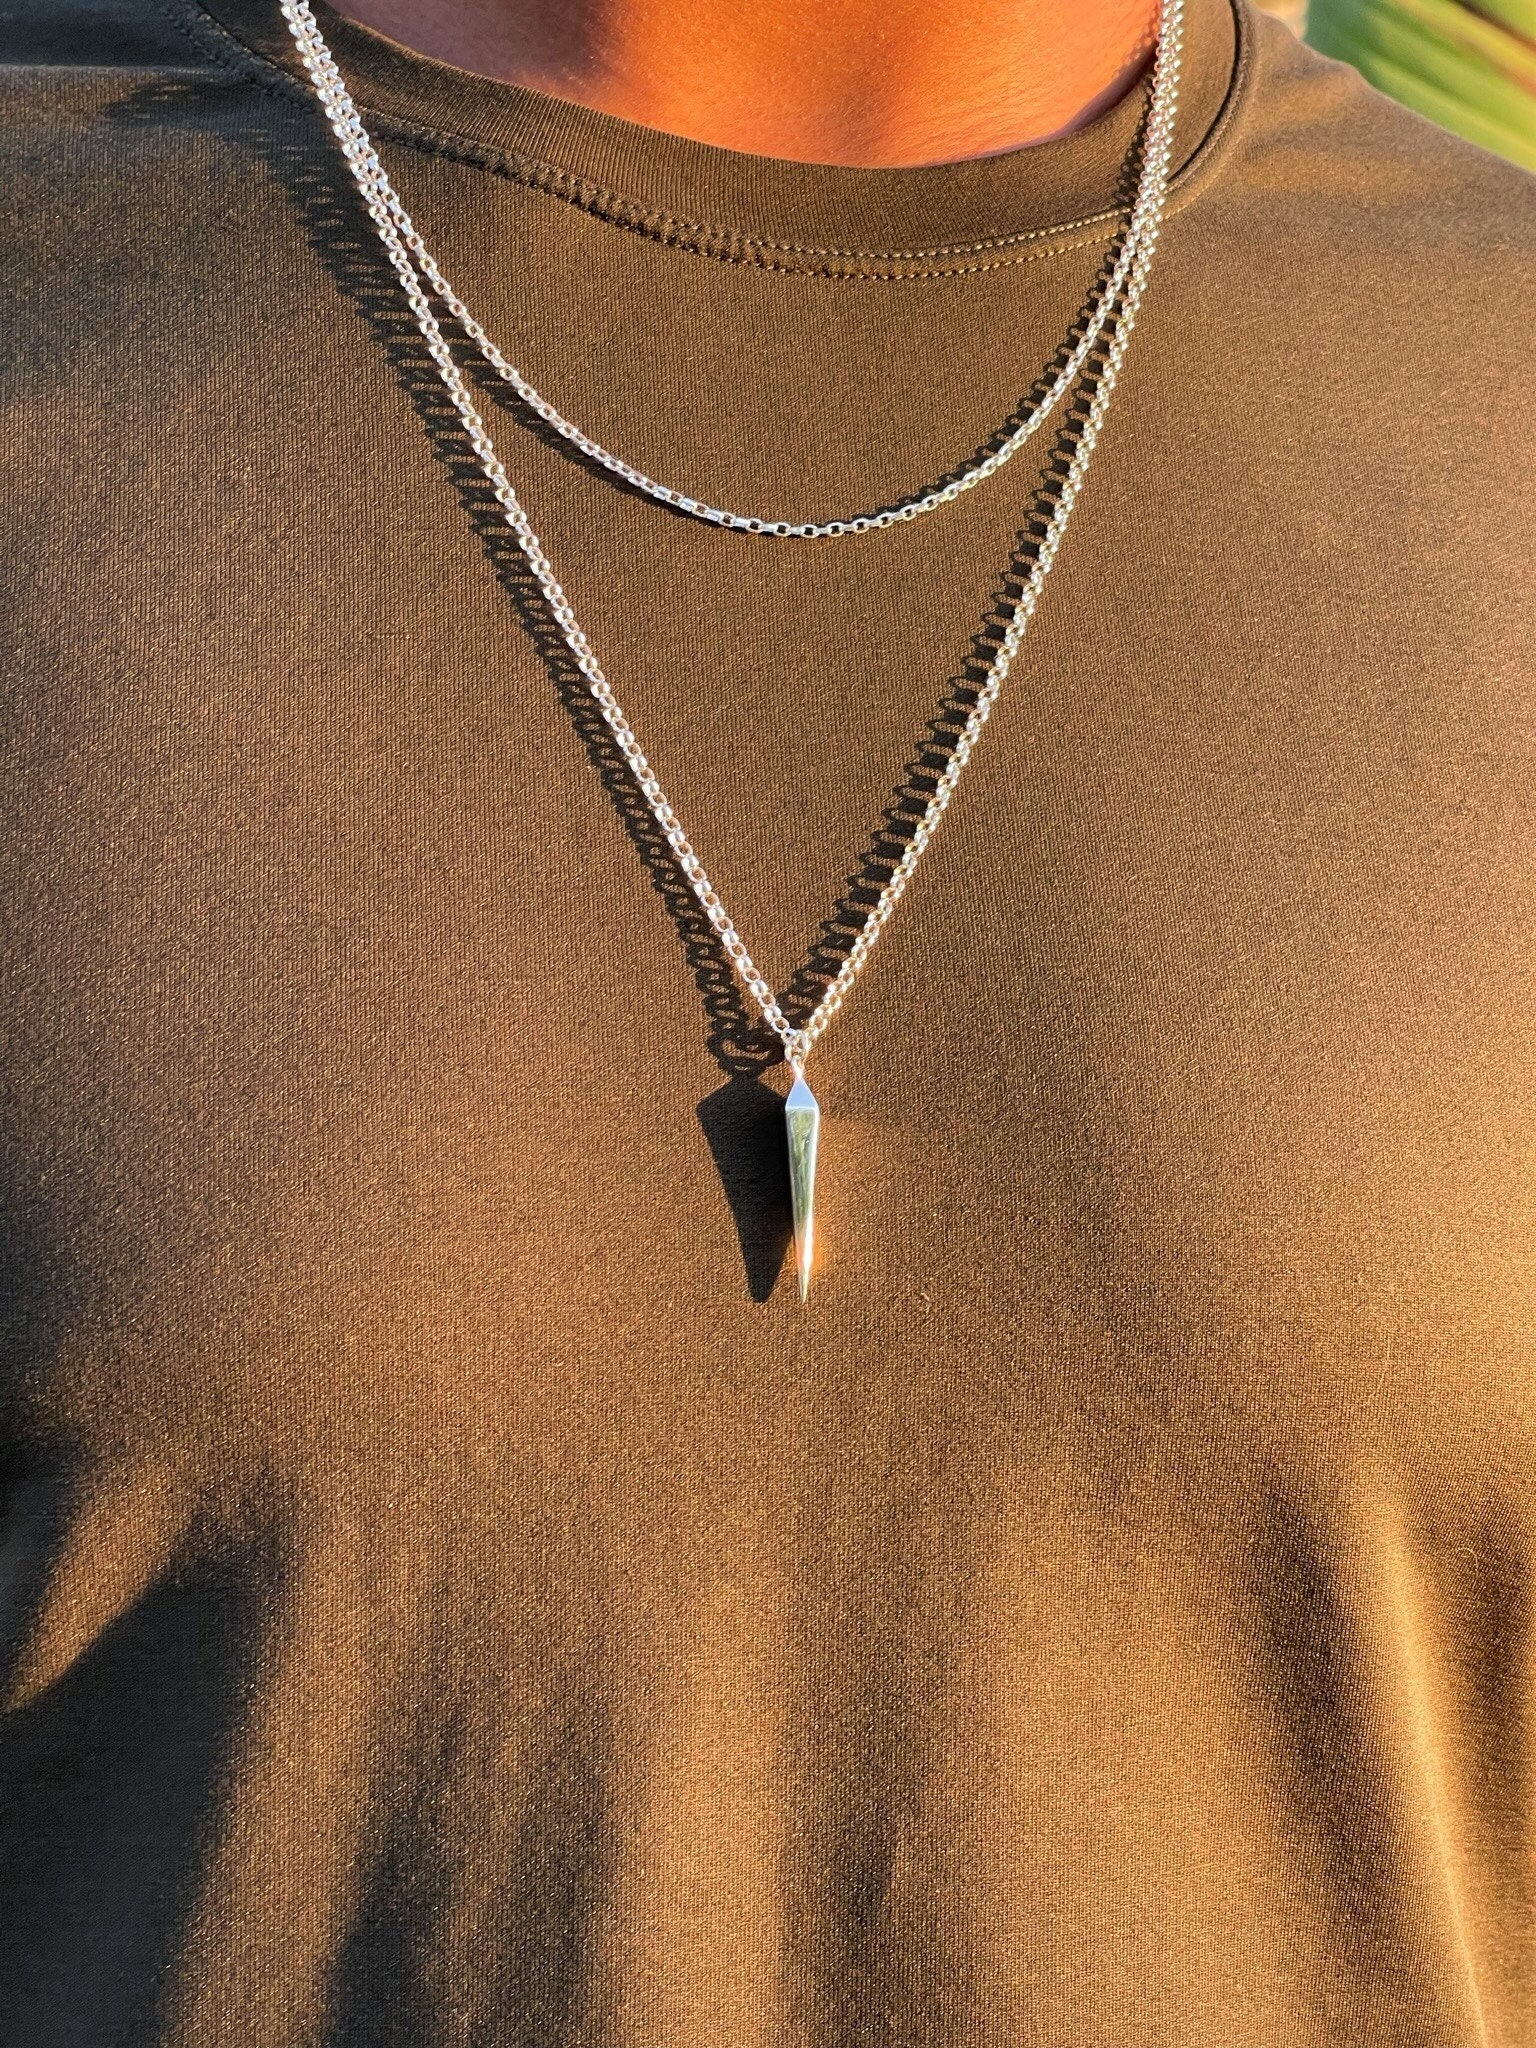 Mens grunge jewelry spike collar • Grunge necklace spiked collar